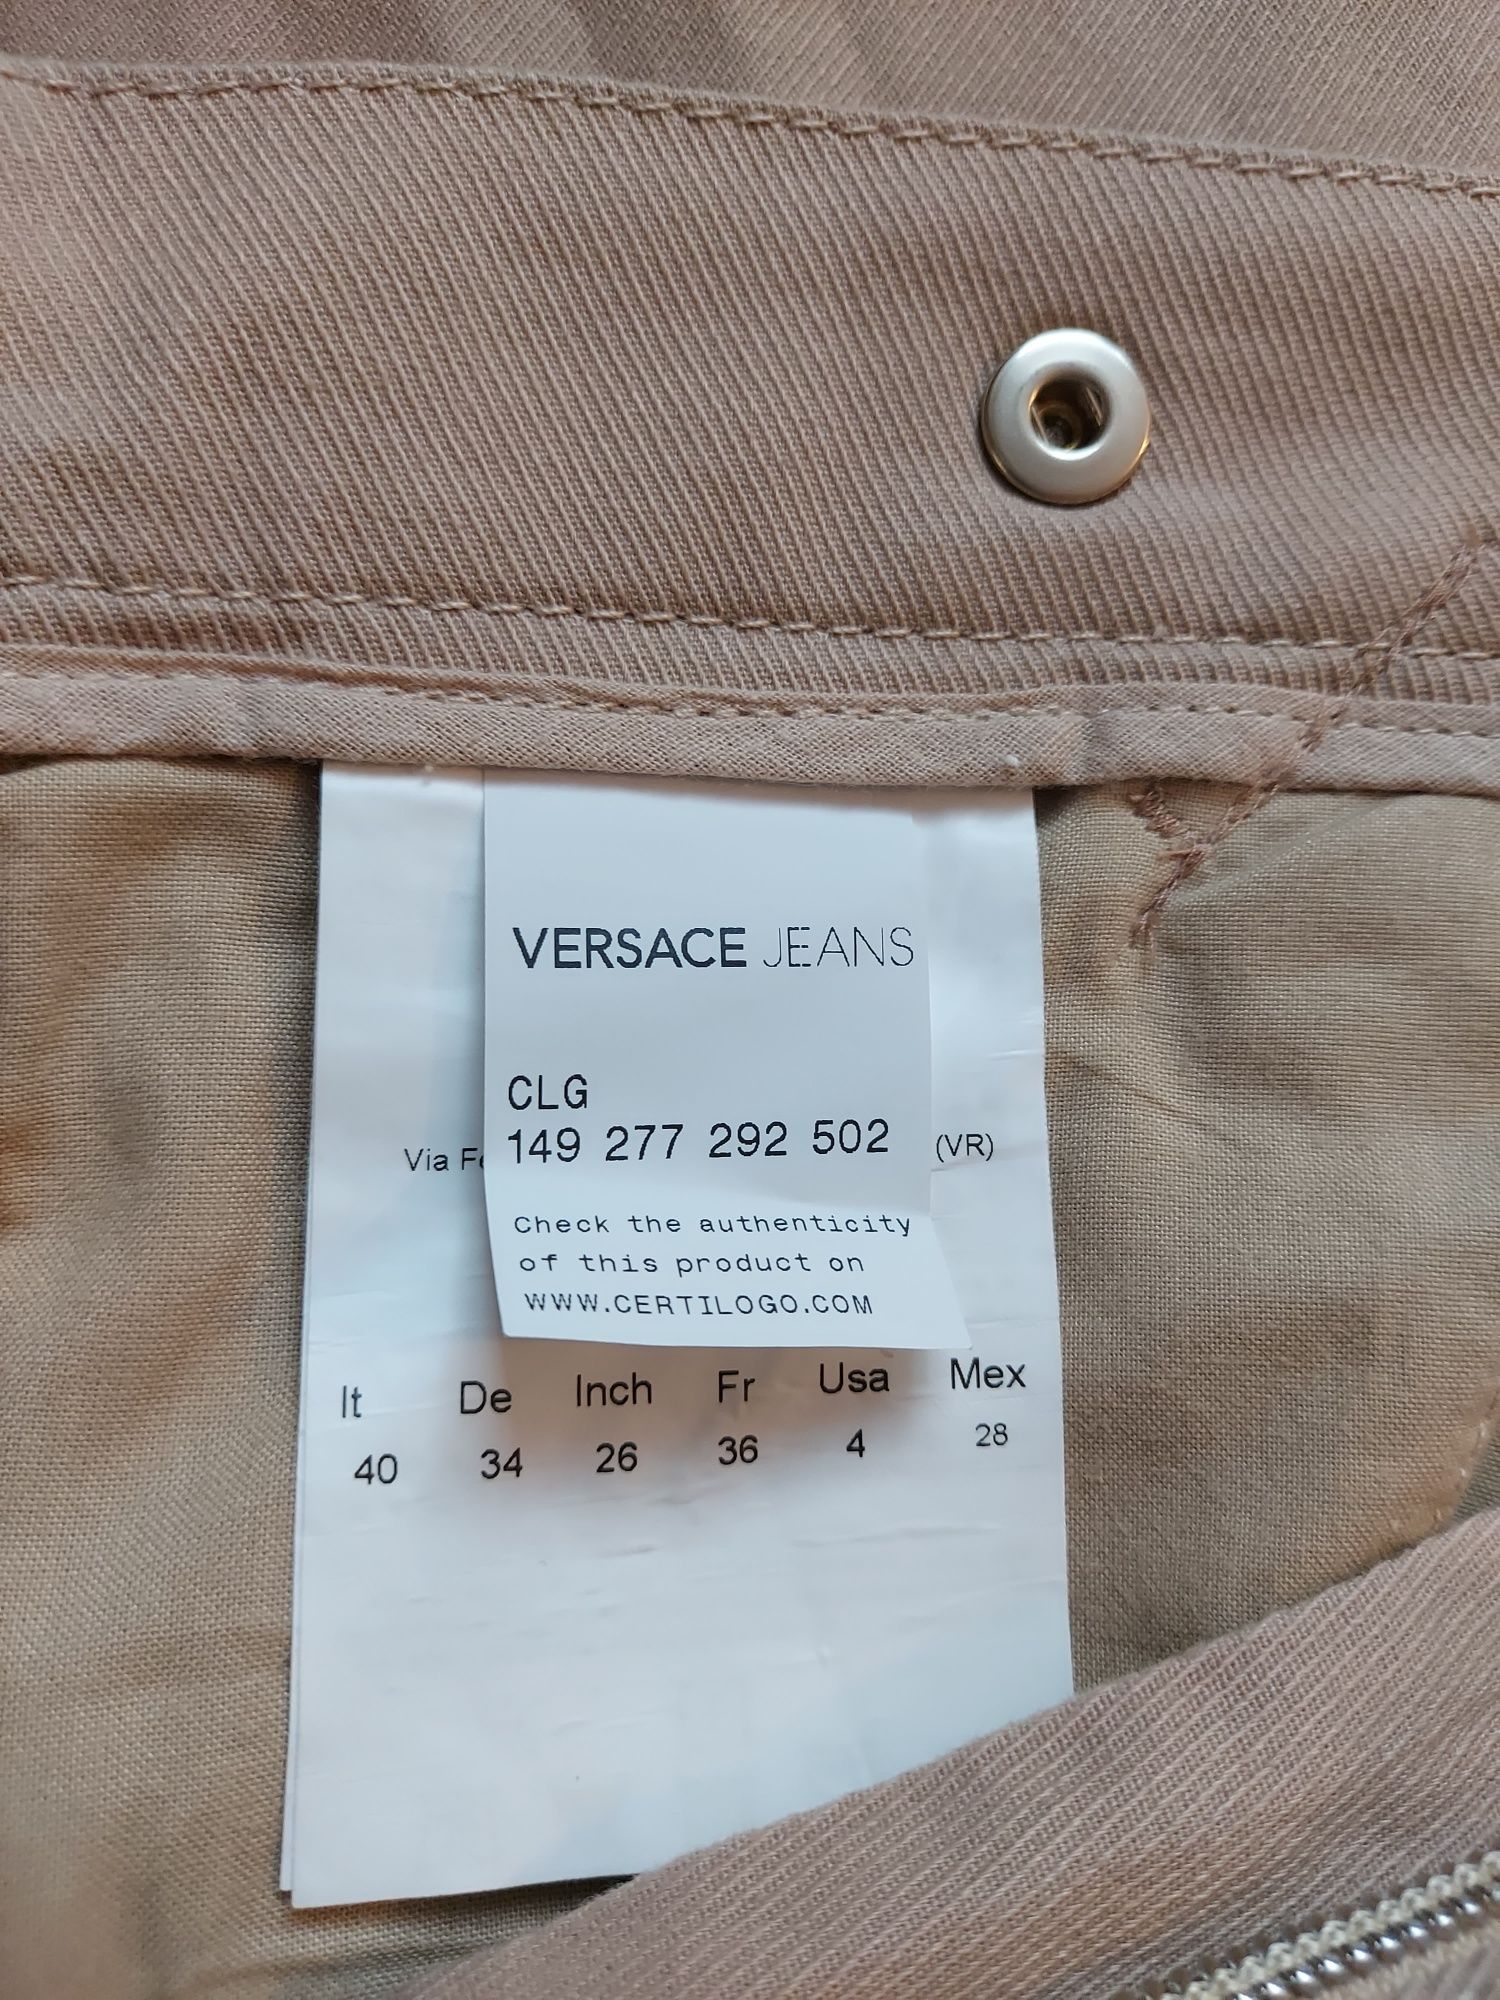 Spodnie Versace damskie. NOWE